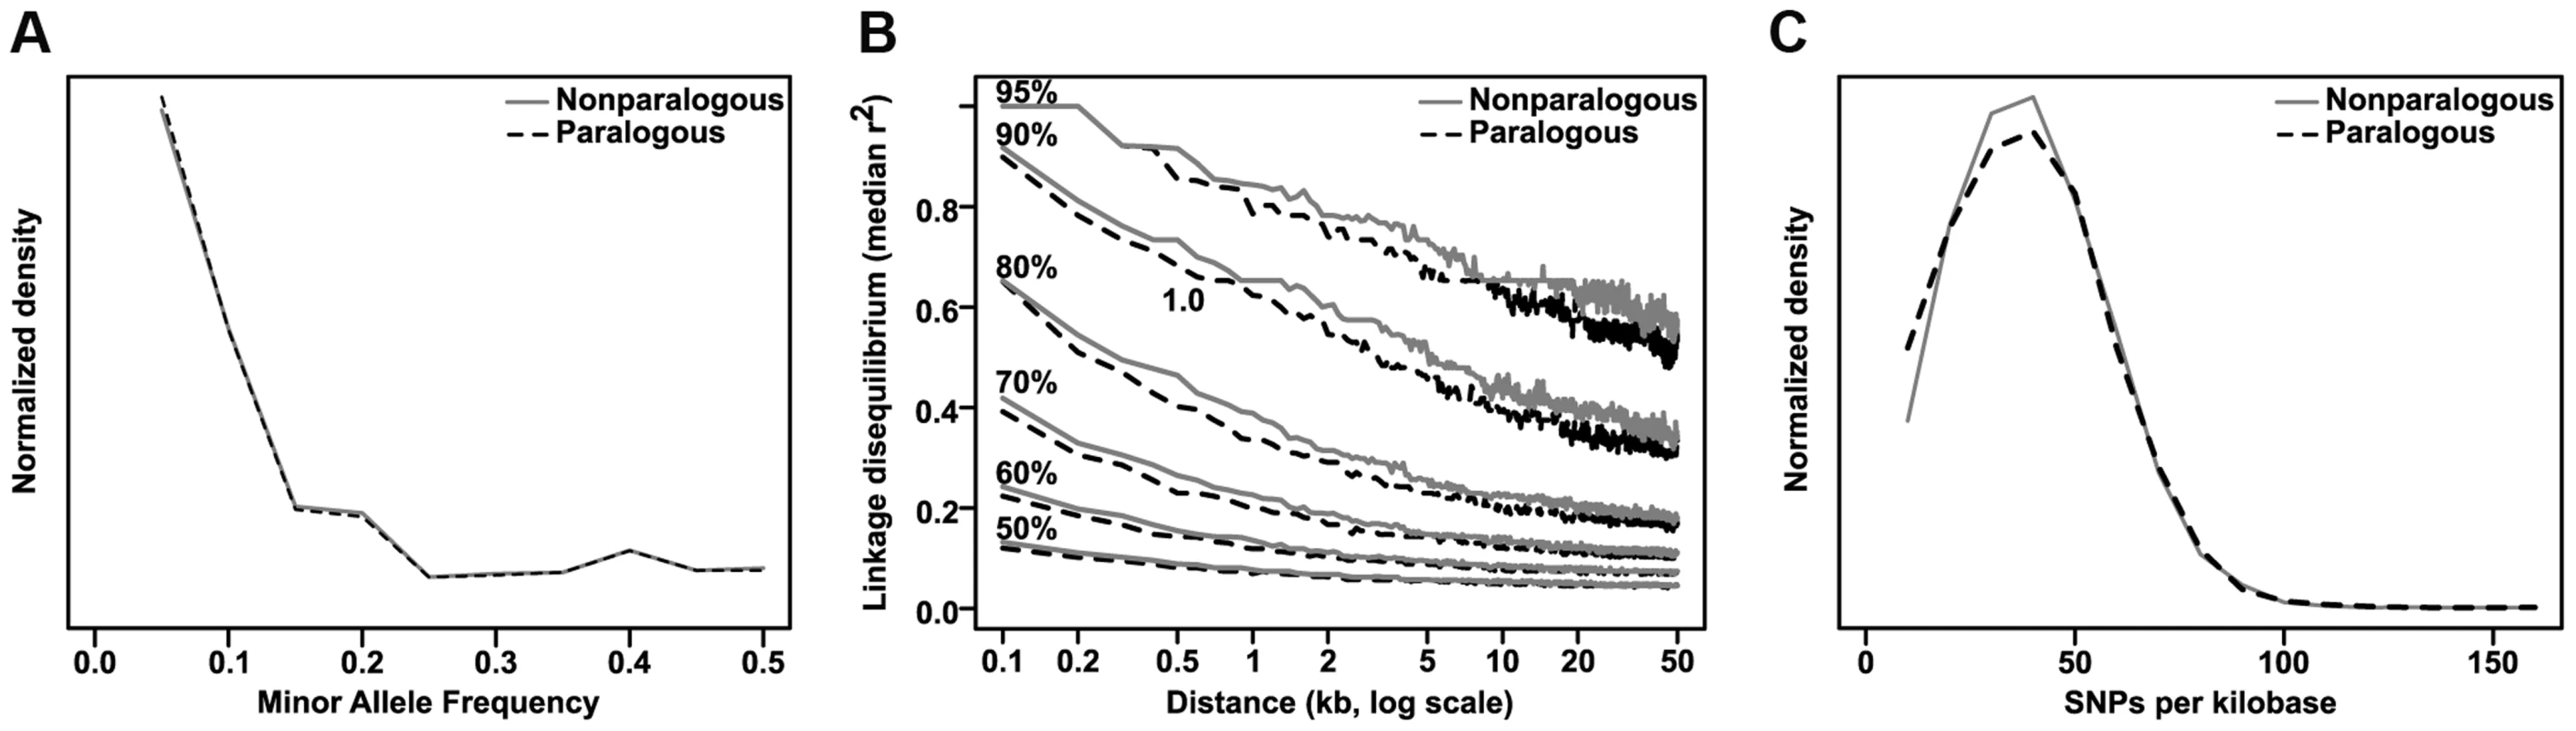 Comparison of paralogous to nonparalogous genes.